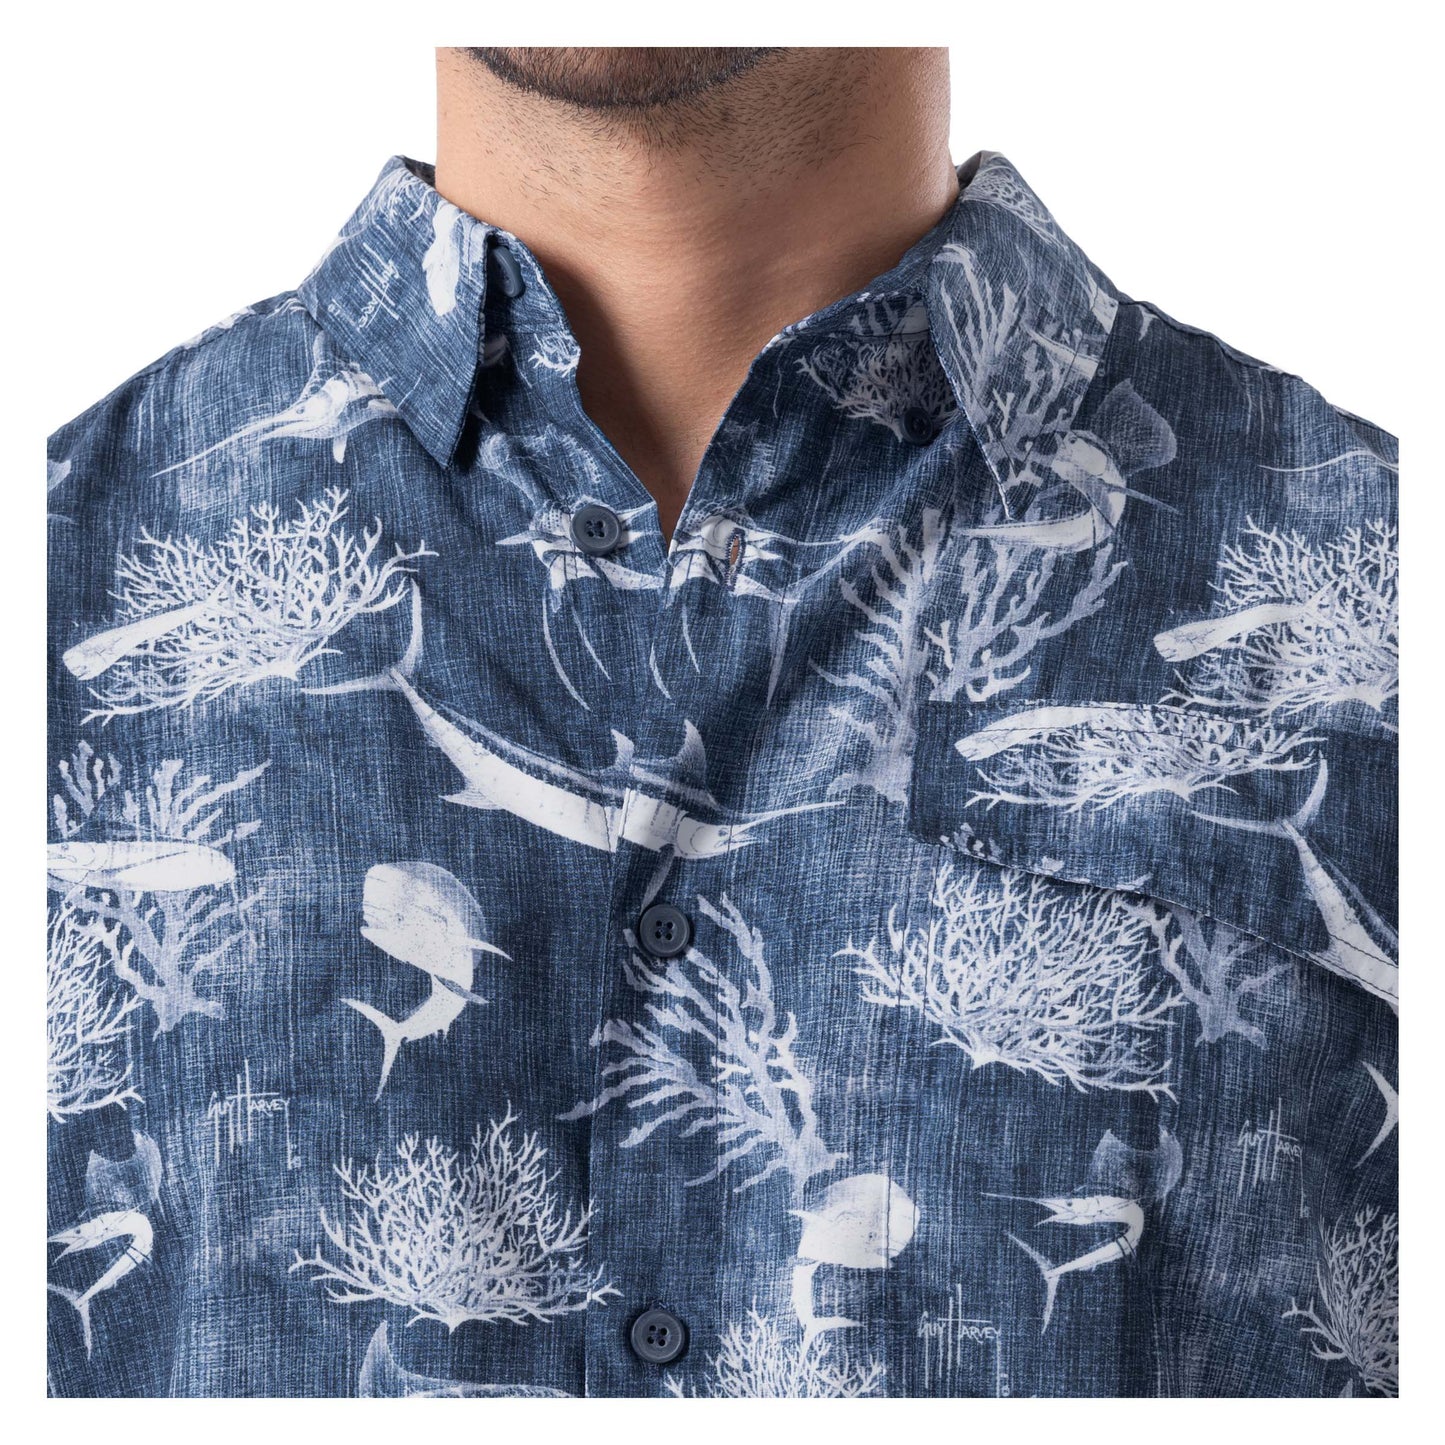 Men's Denim Shells Long Sleeve Fishing Shirt